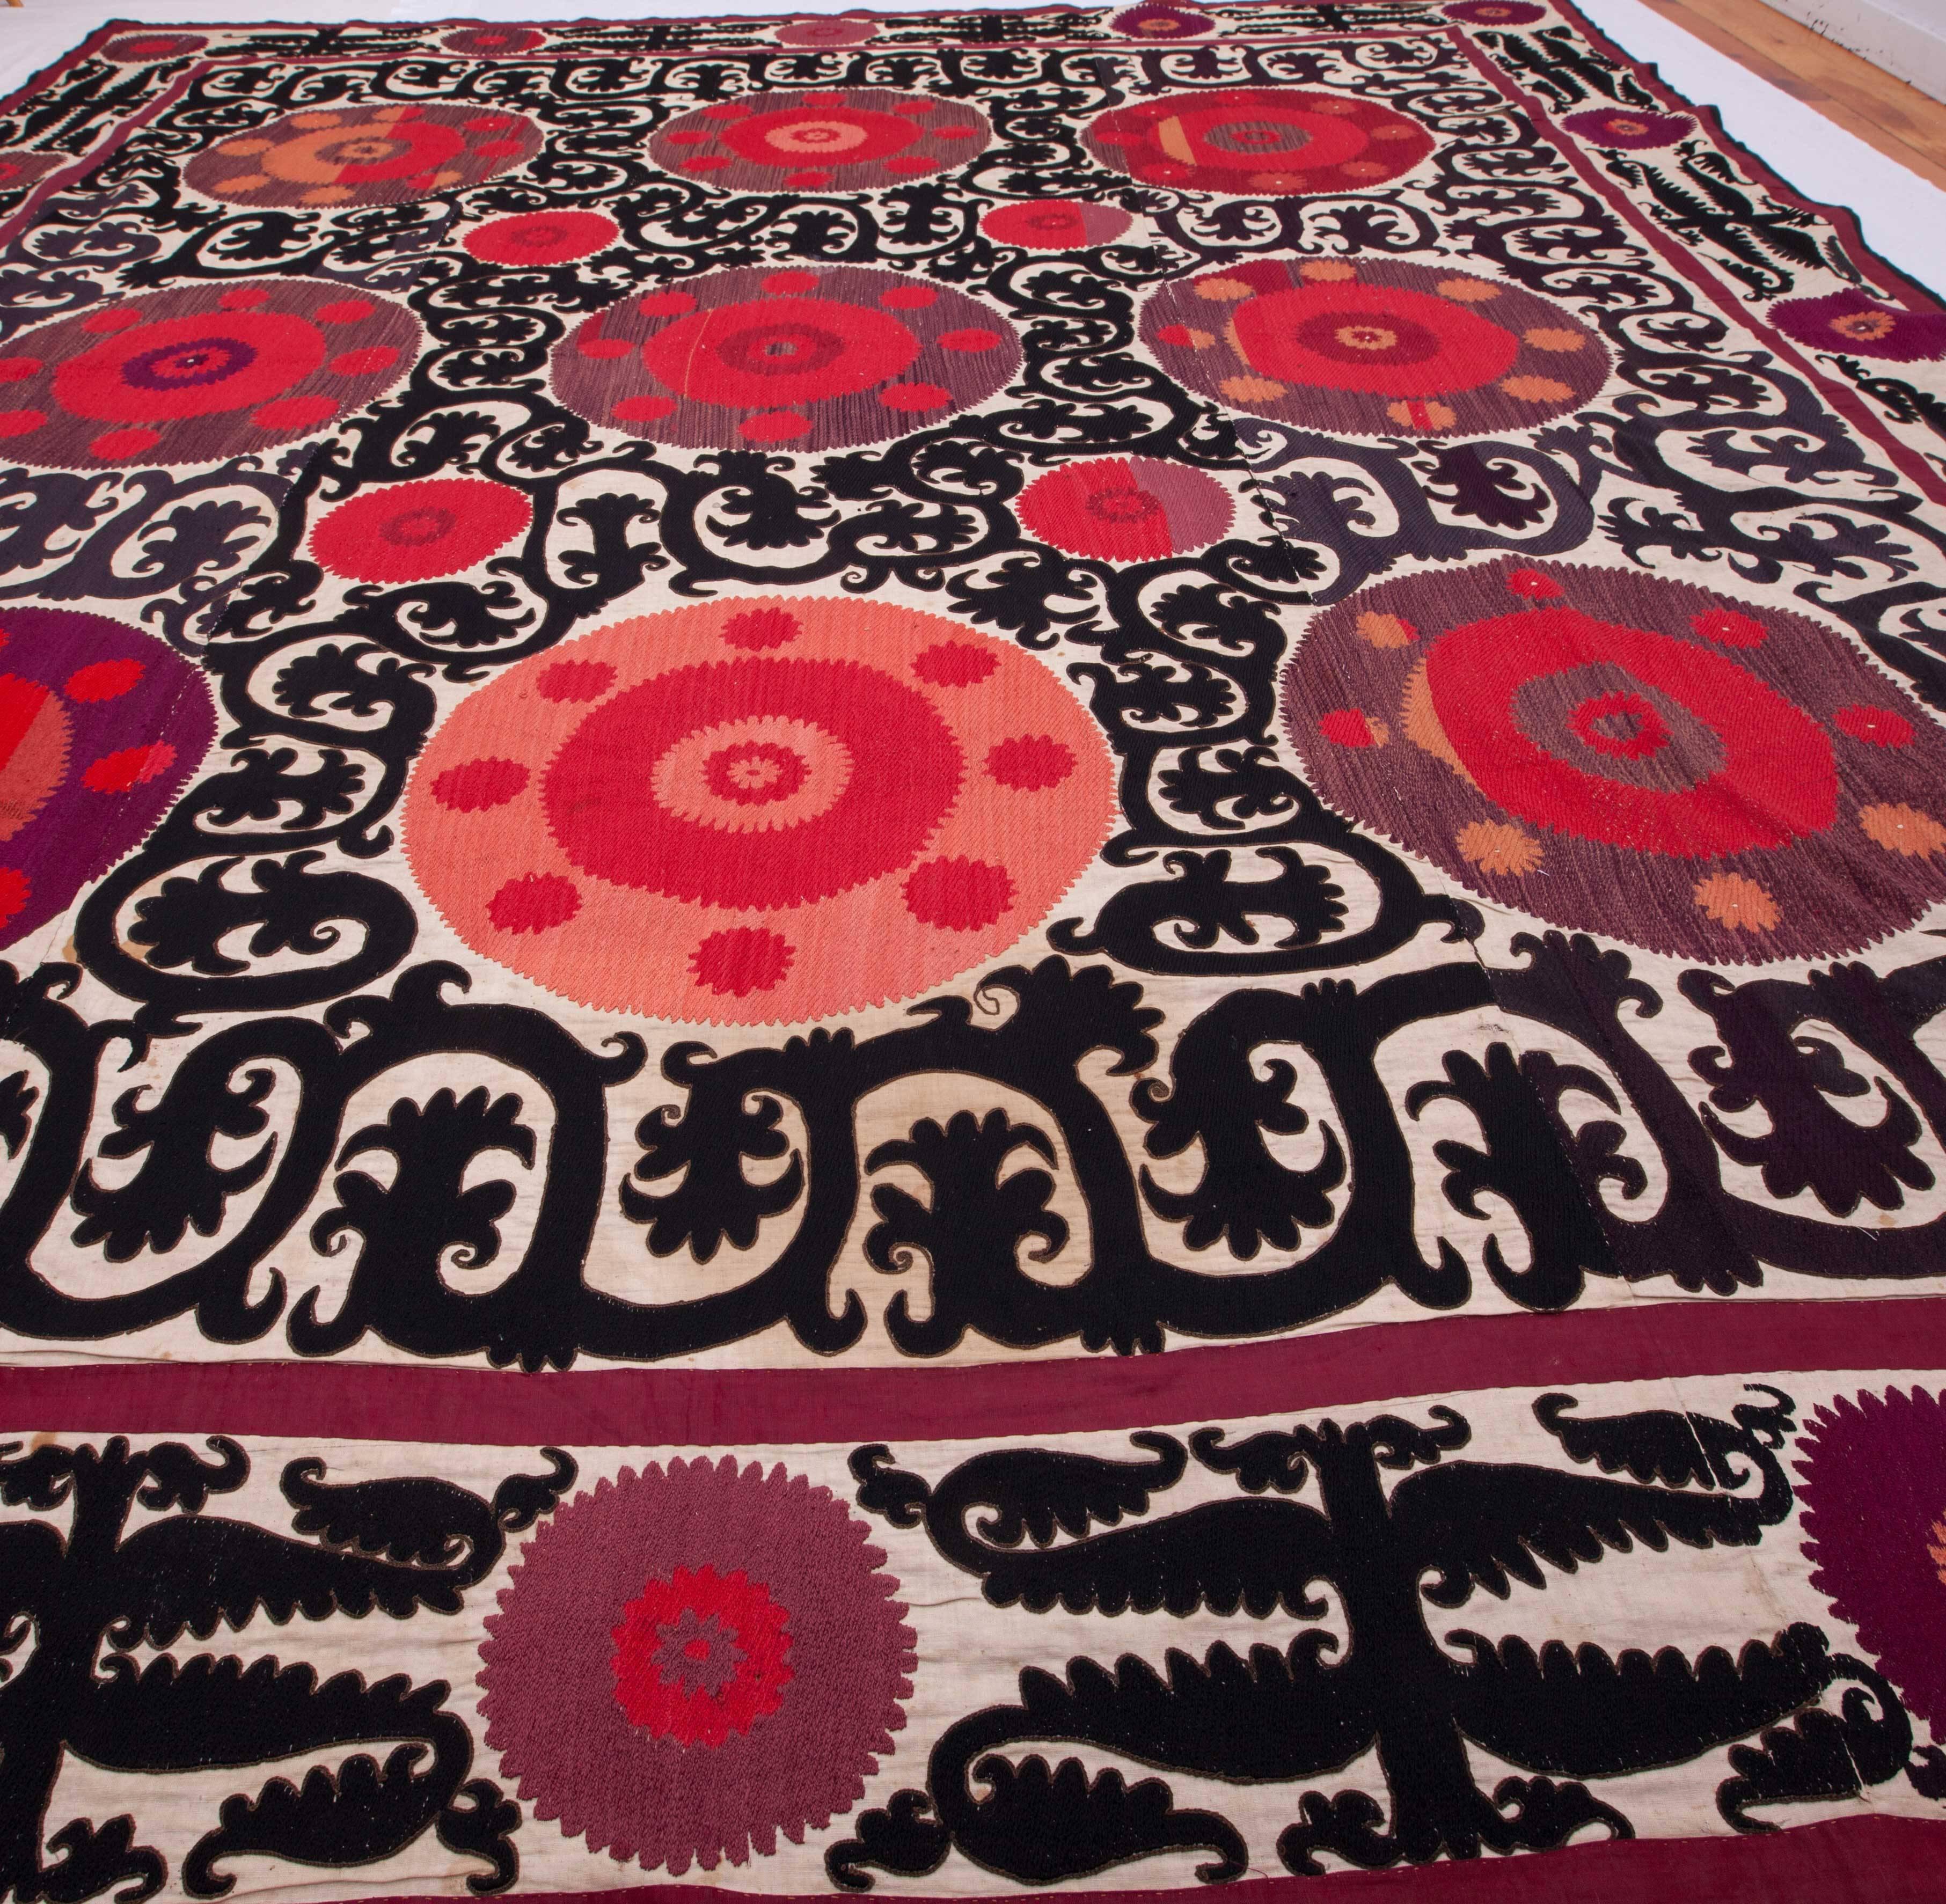 Early 20th Century Samarkand Suzani from Uzbekistan, Silk Embroidery on Cotton 4